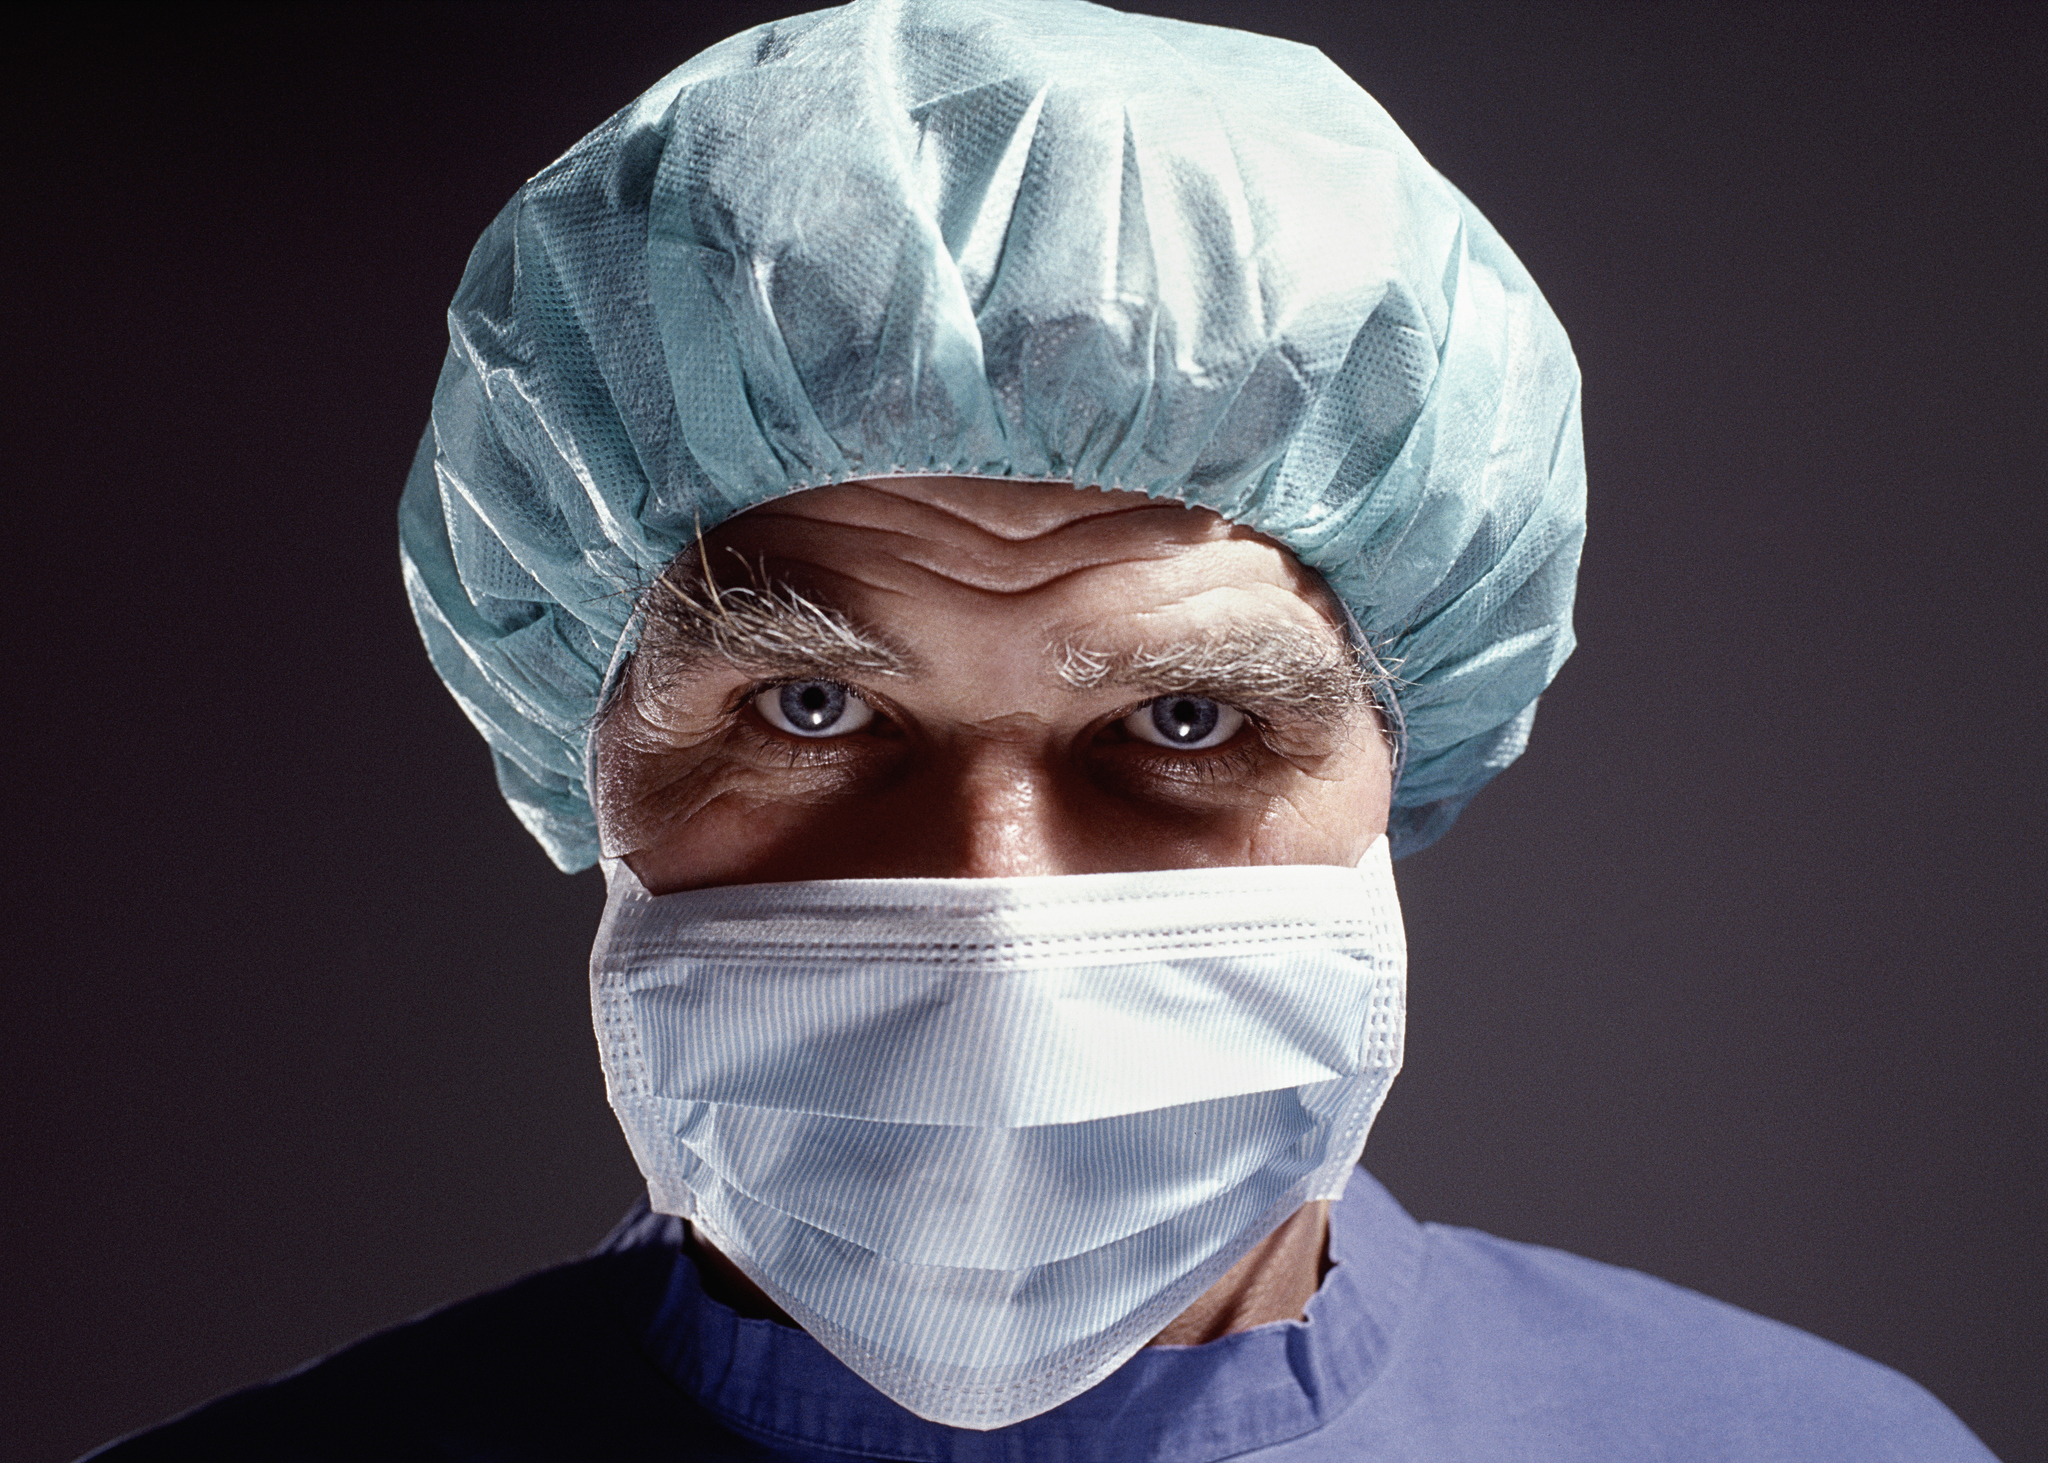 Portrait of a evil-looking surgeon